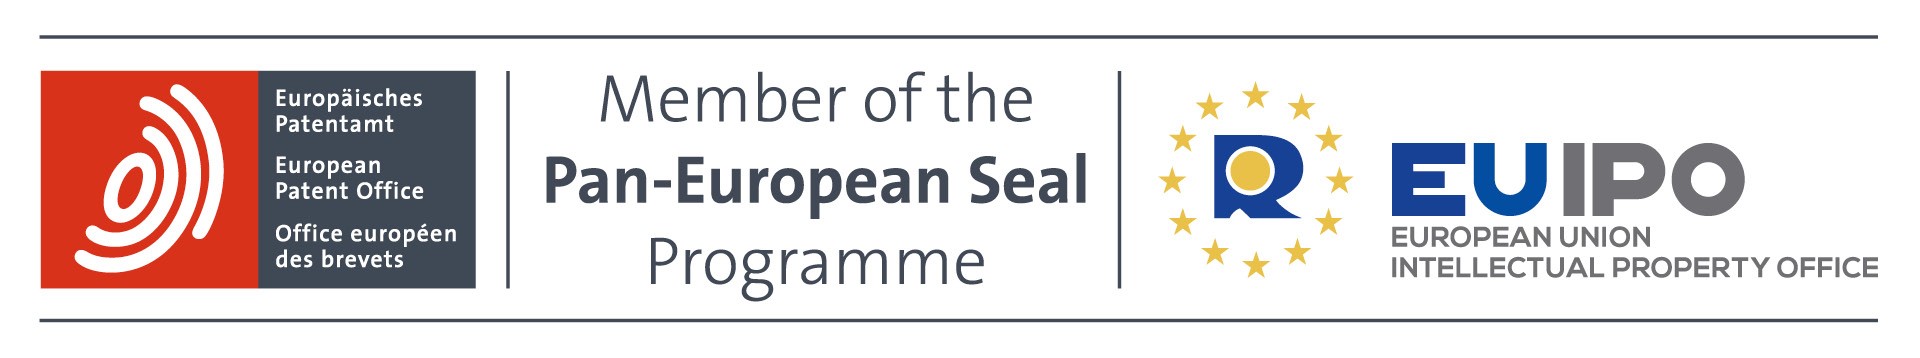 Logotypy EUIPO, Pan-European Seal PTP oraz EPO